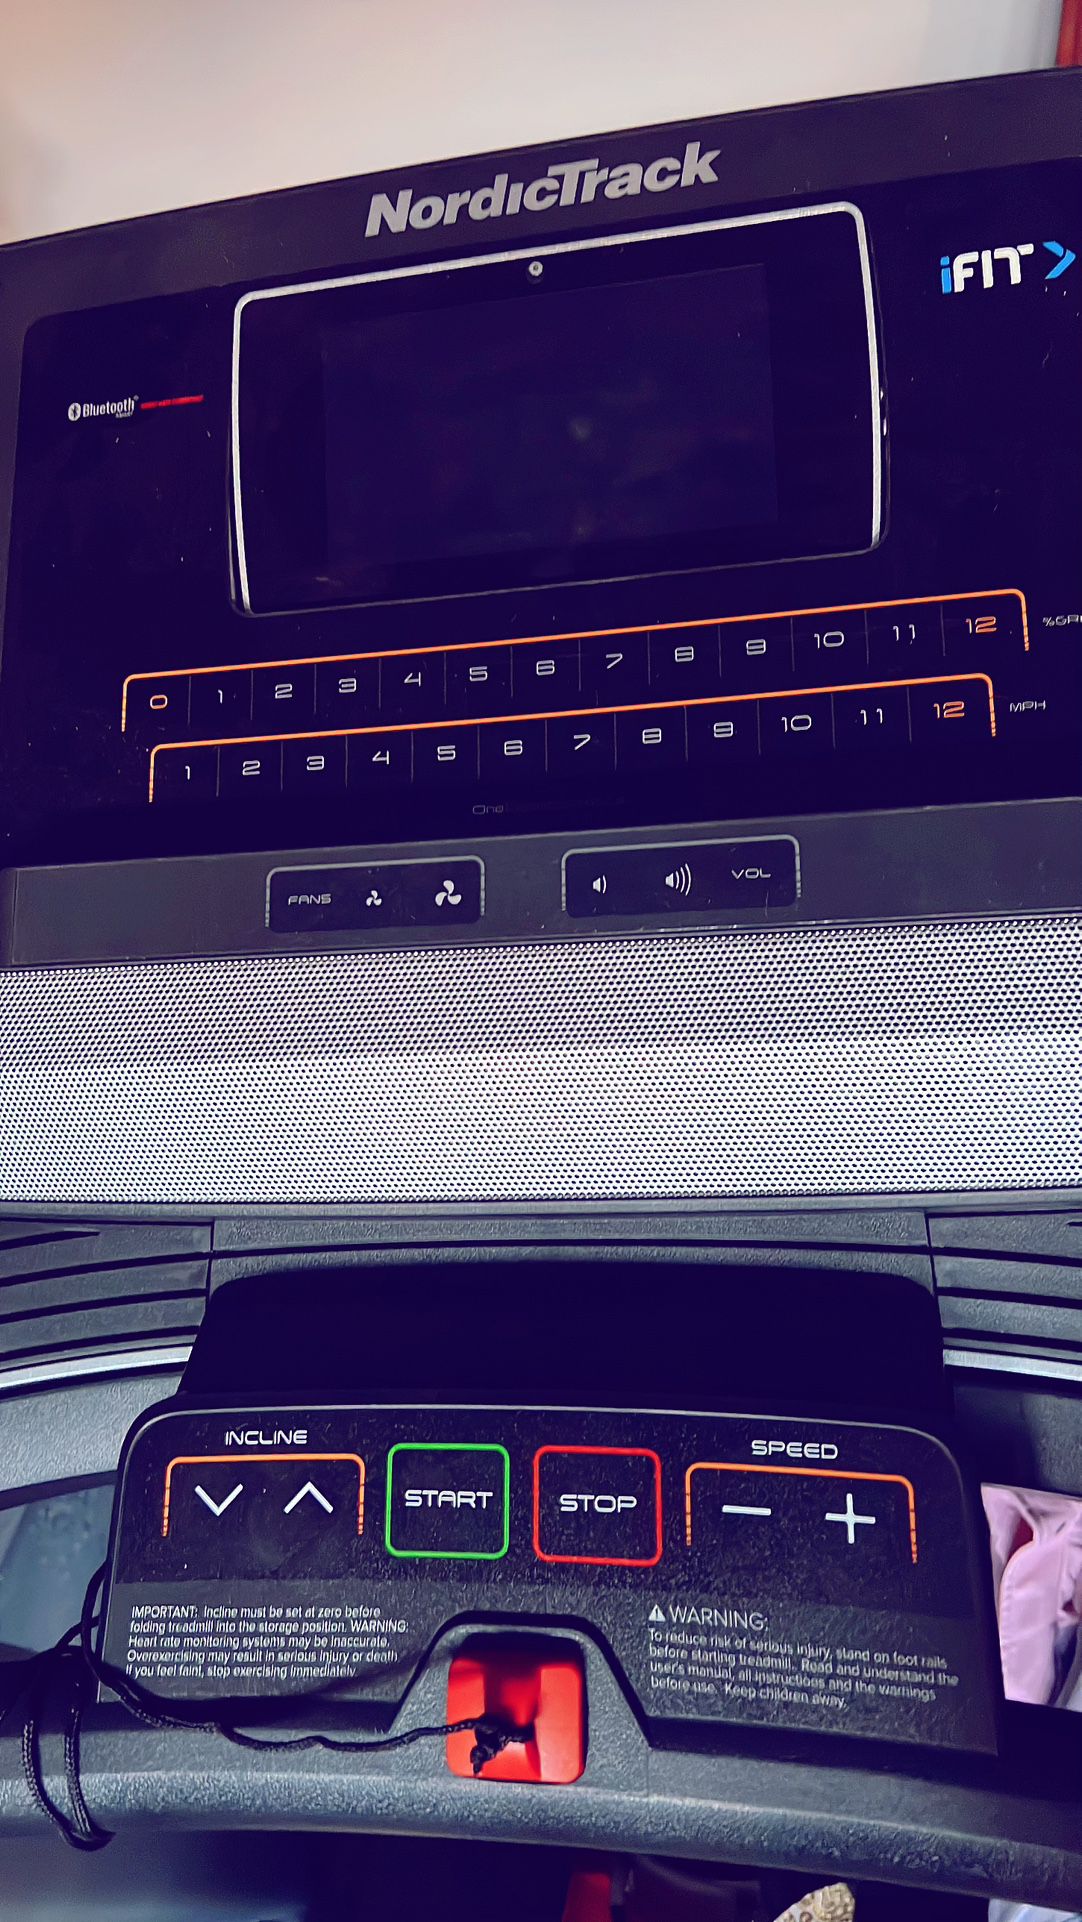 New Treadmill 